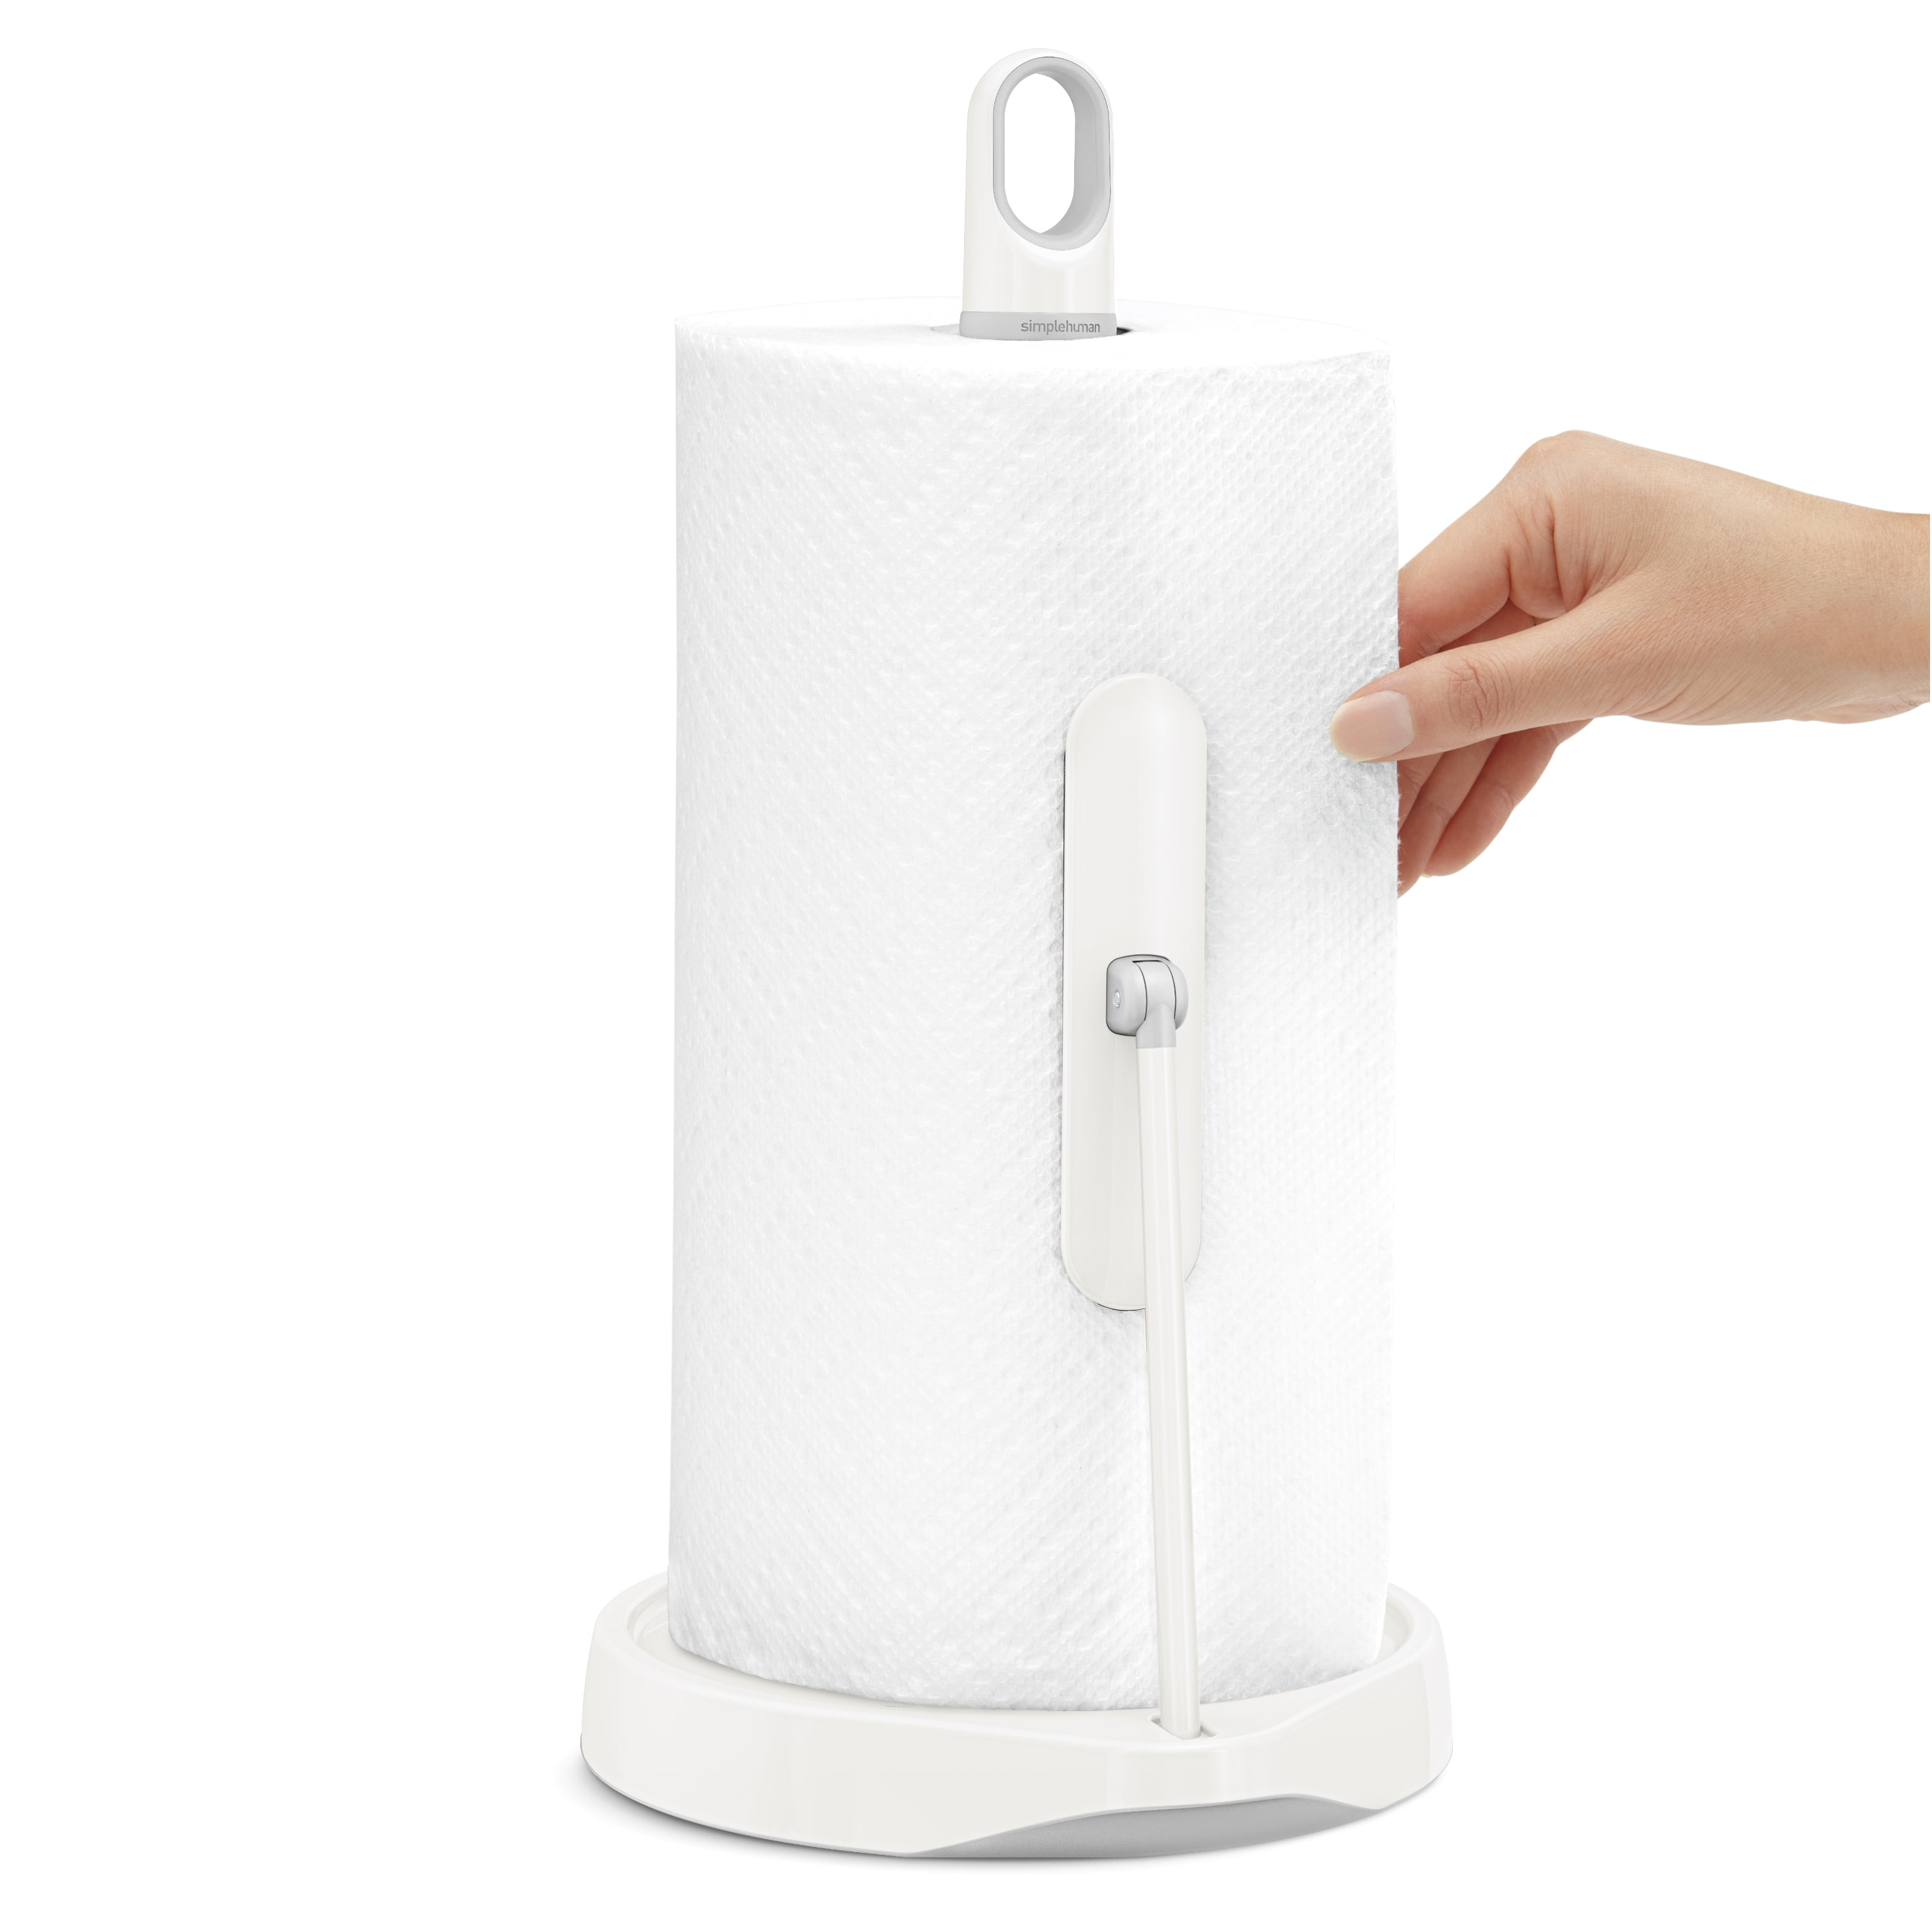 simplehuman - simplehuman Tension Arm Paper Towel Holder SKU : # 8043826 